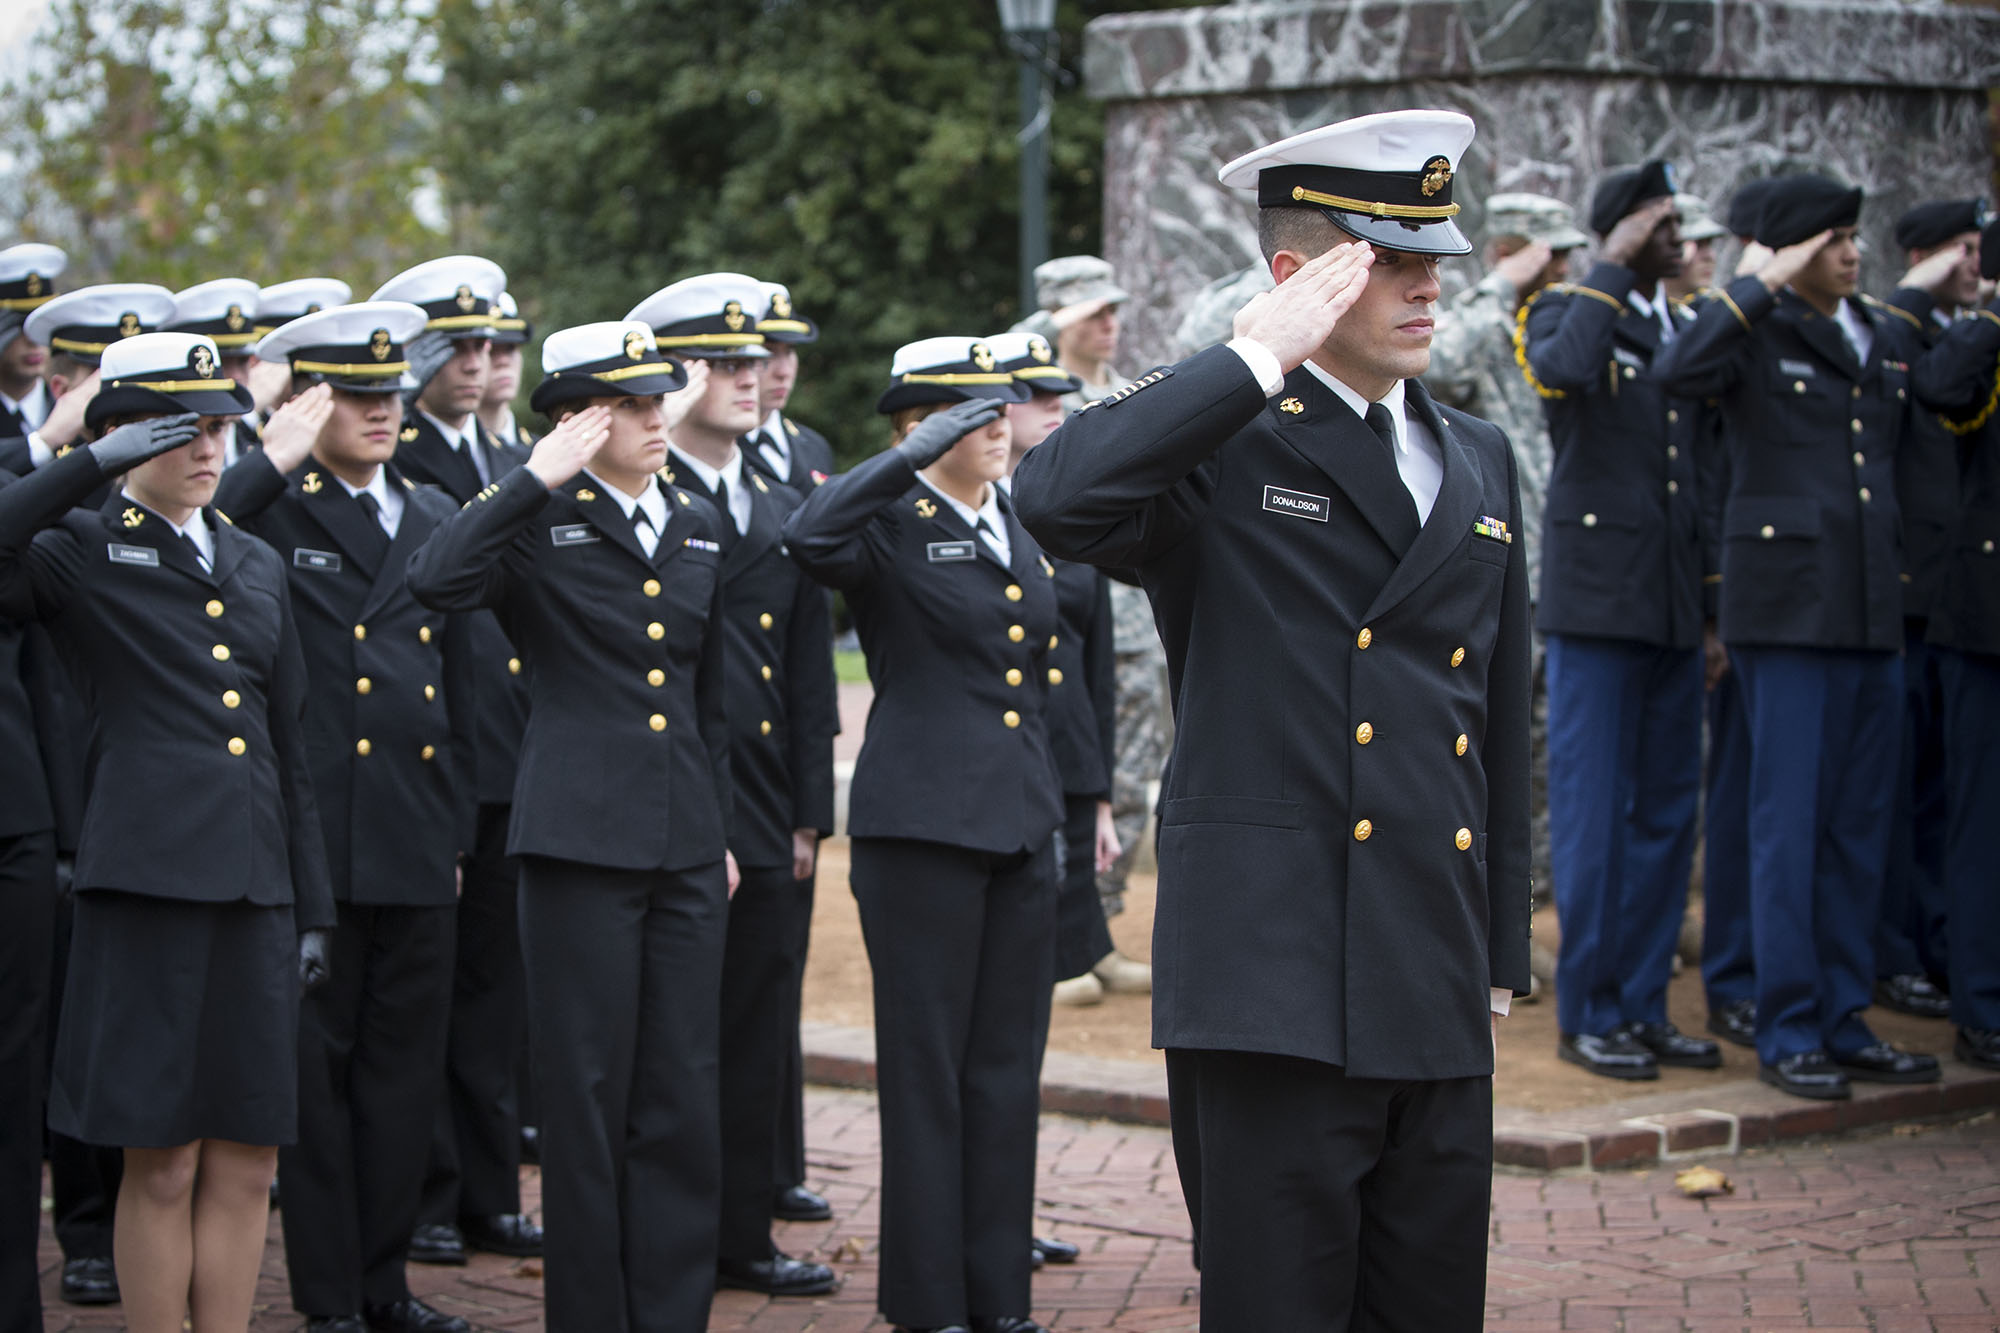 USA Military men and women saluting